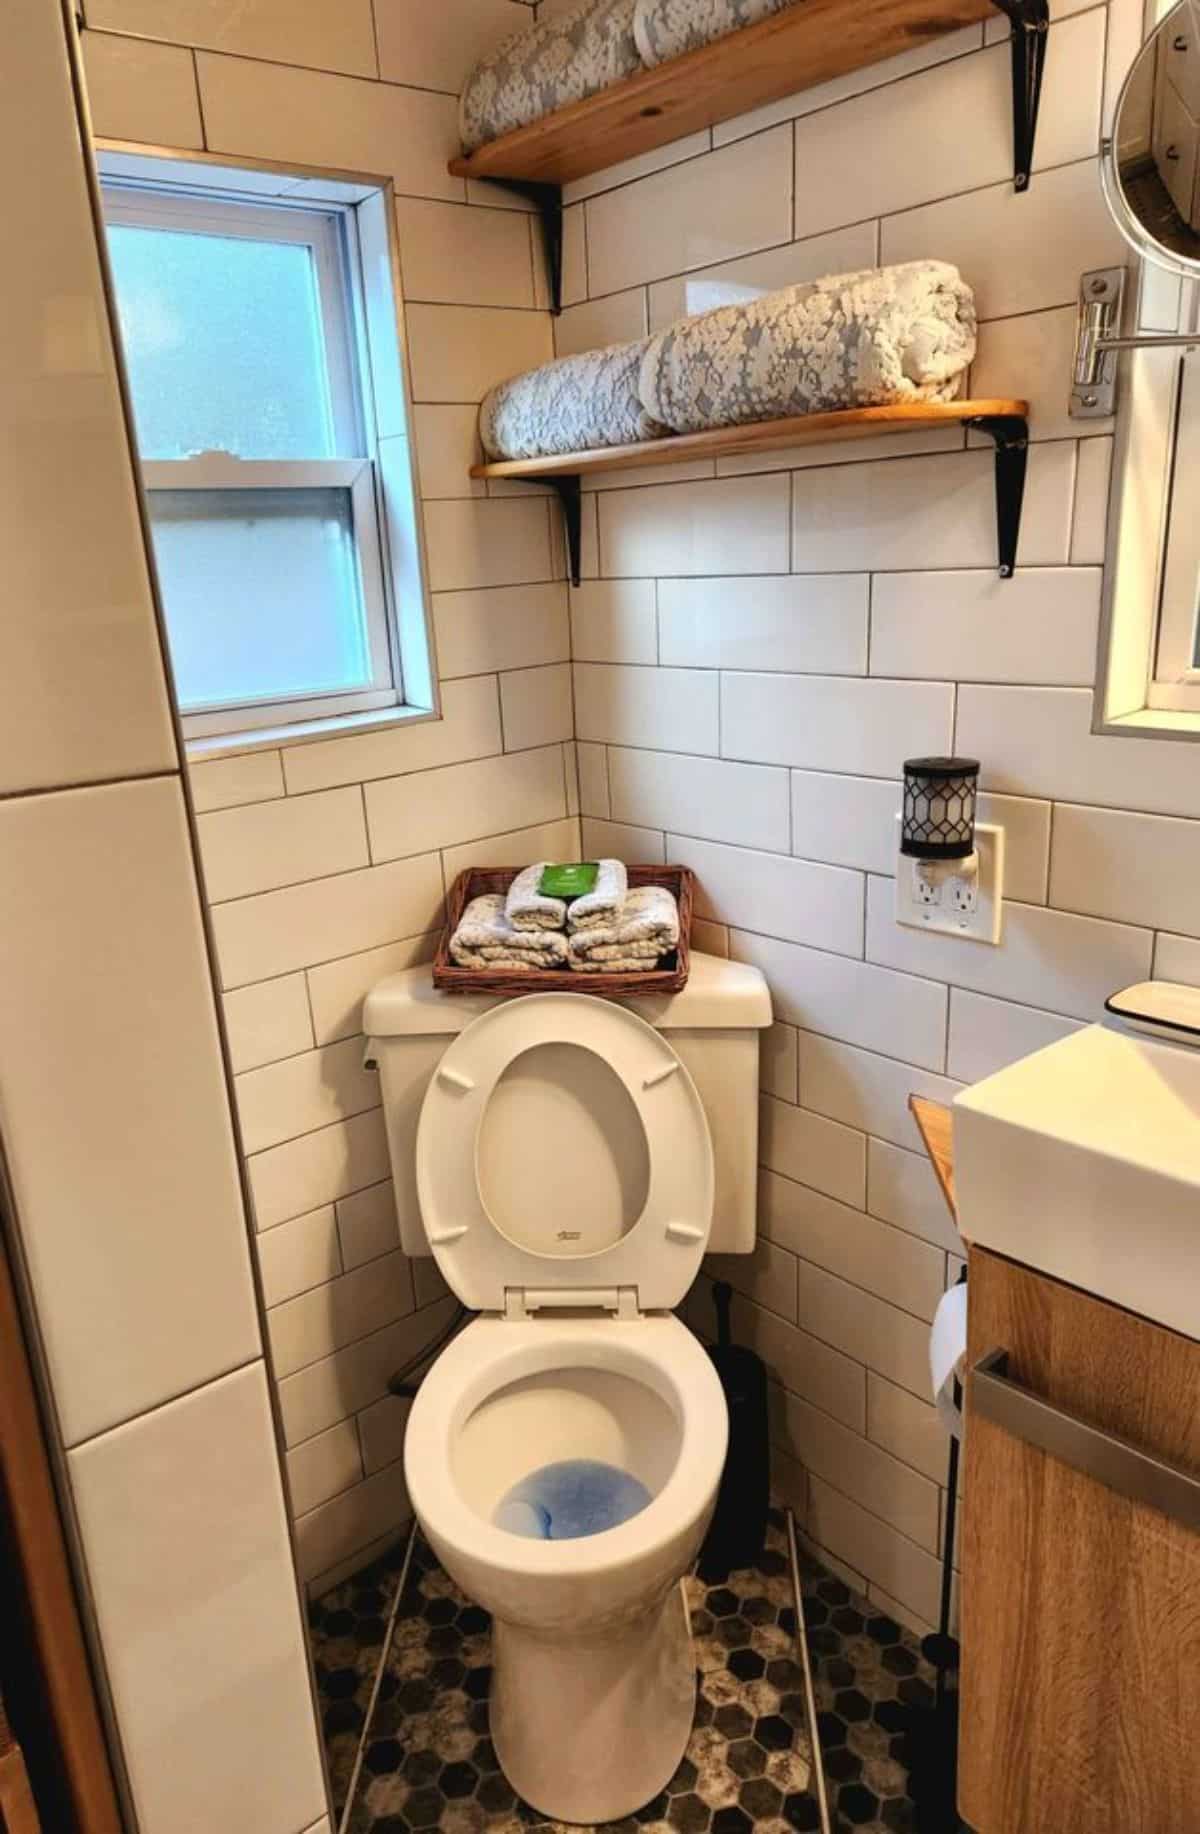 standard toilet installed in bathroom of rustic mini home